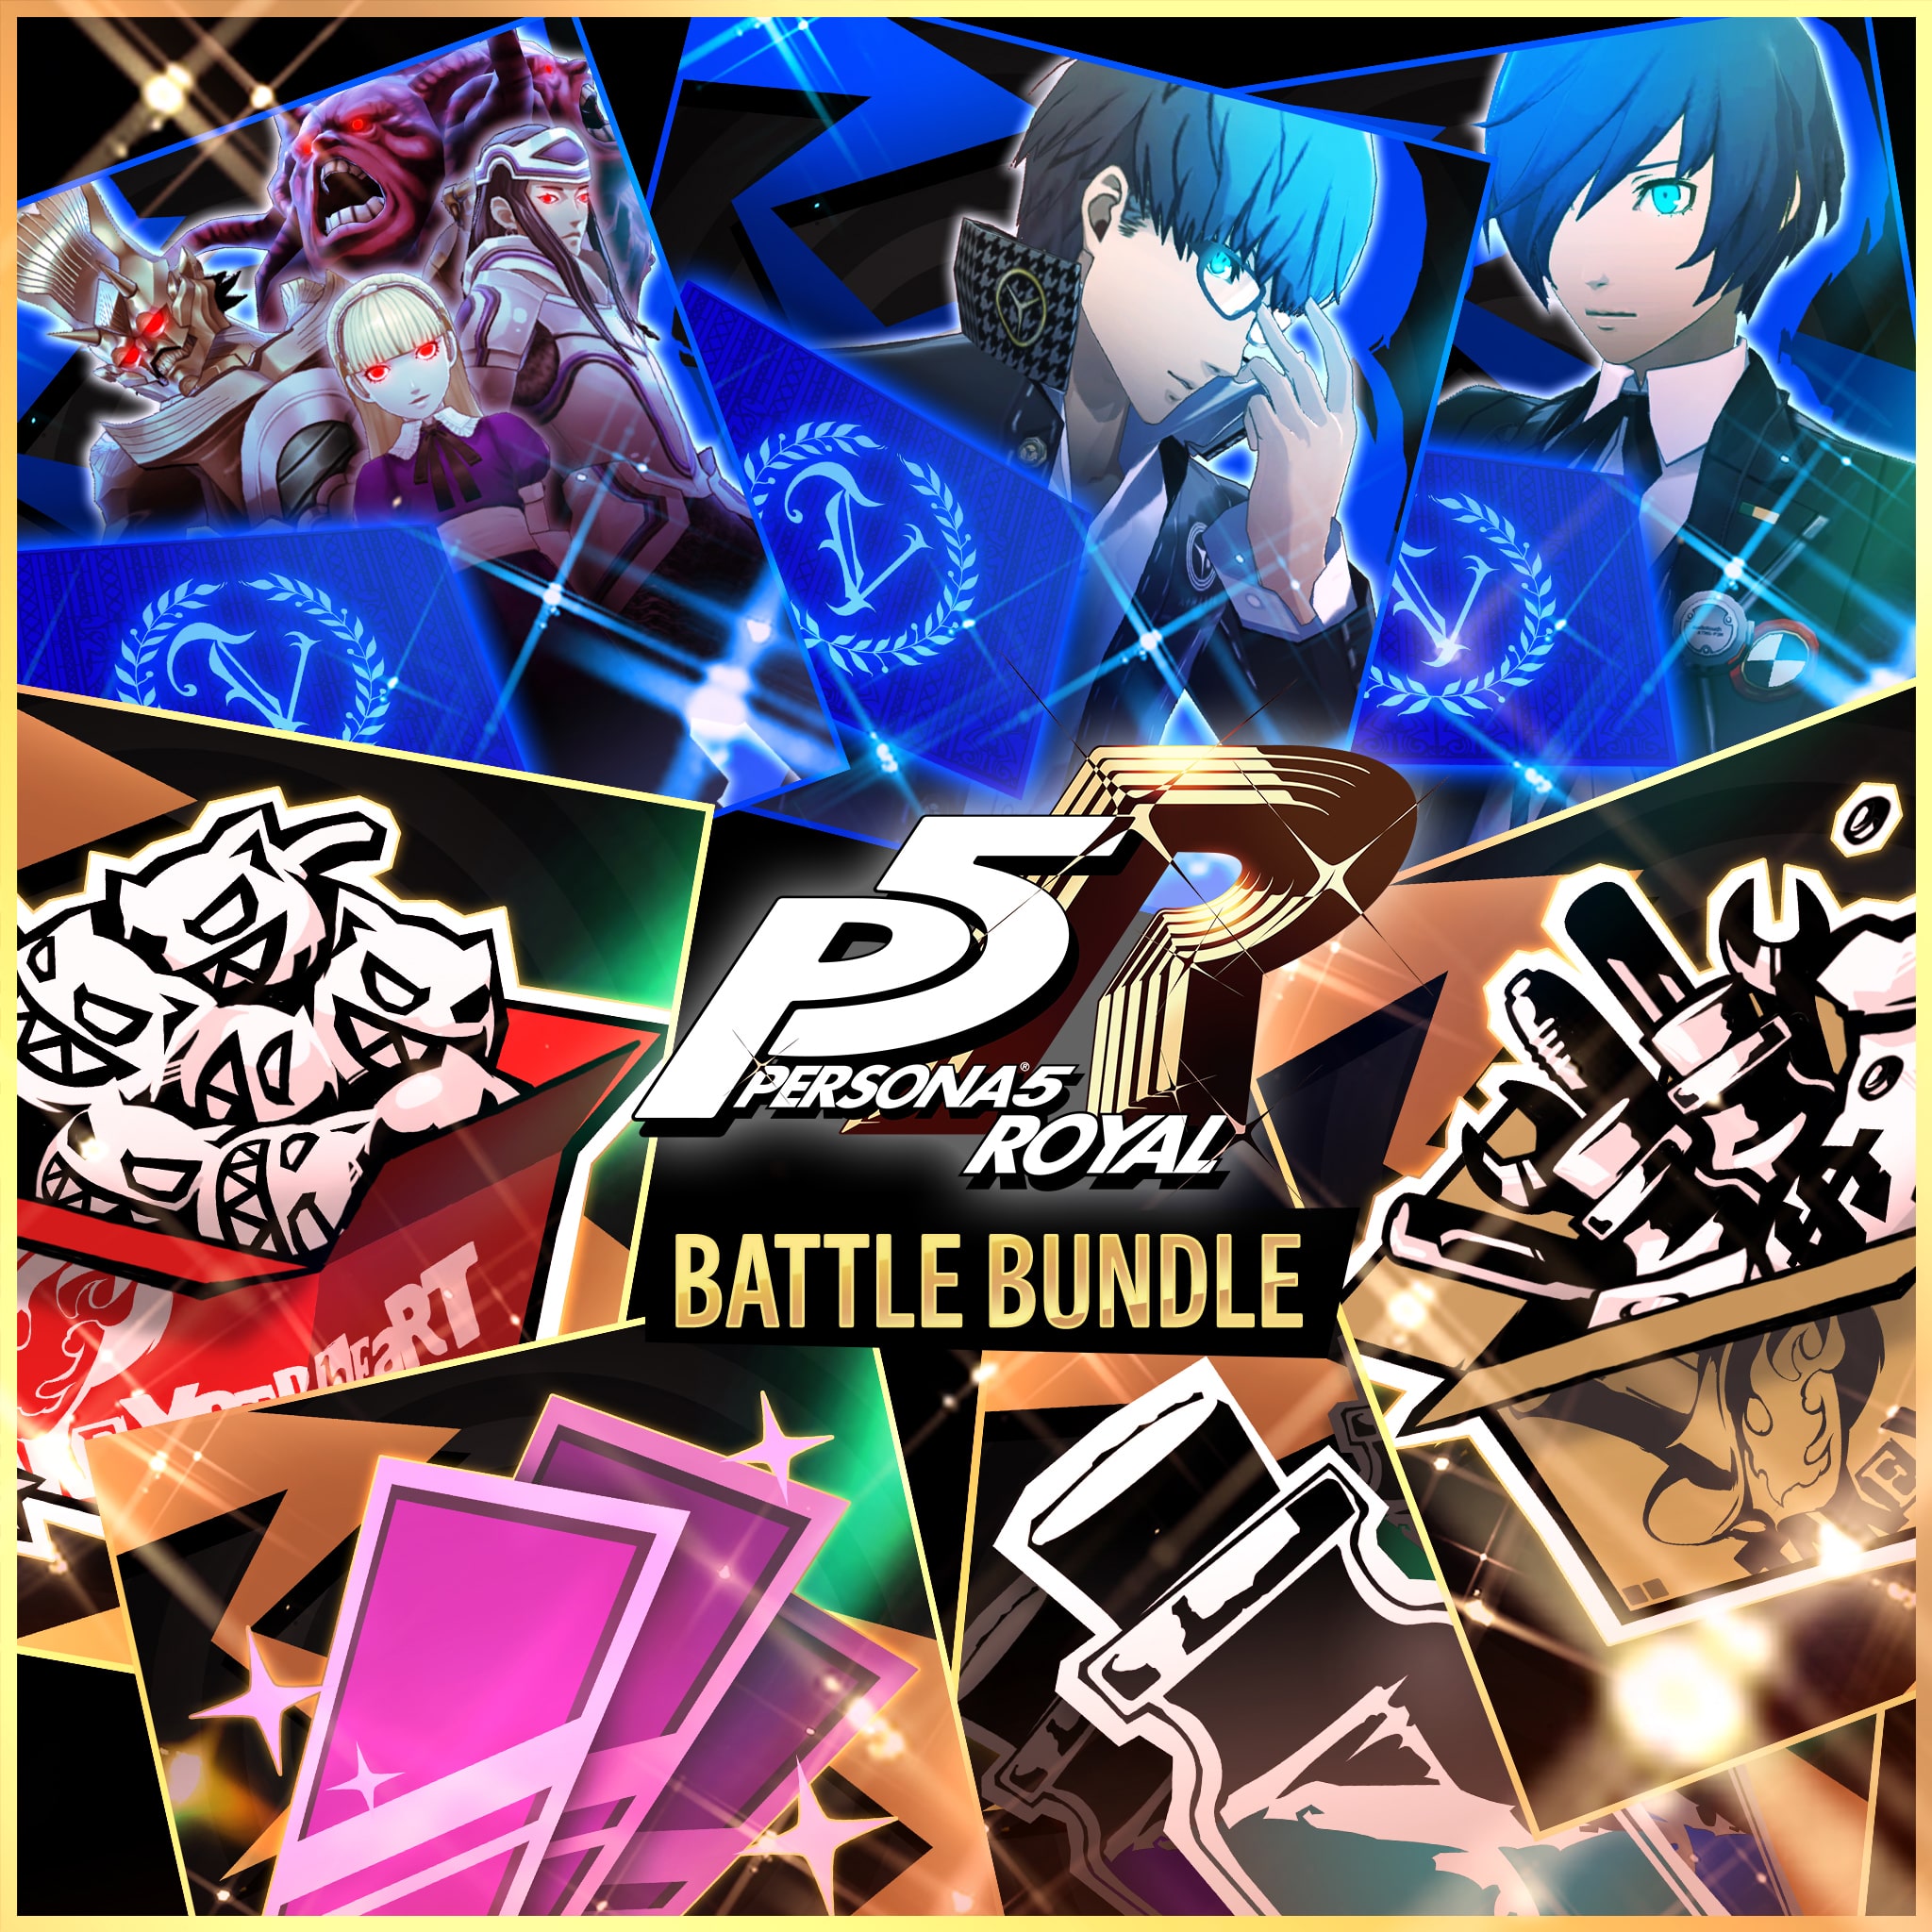 Persona®5 Royal Battle Bundle